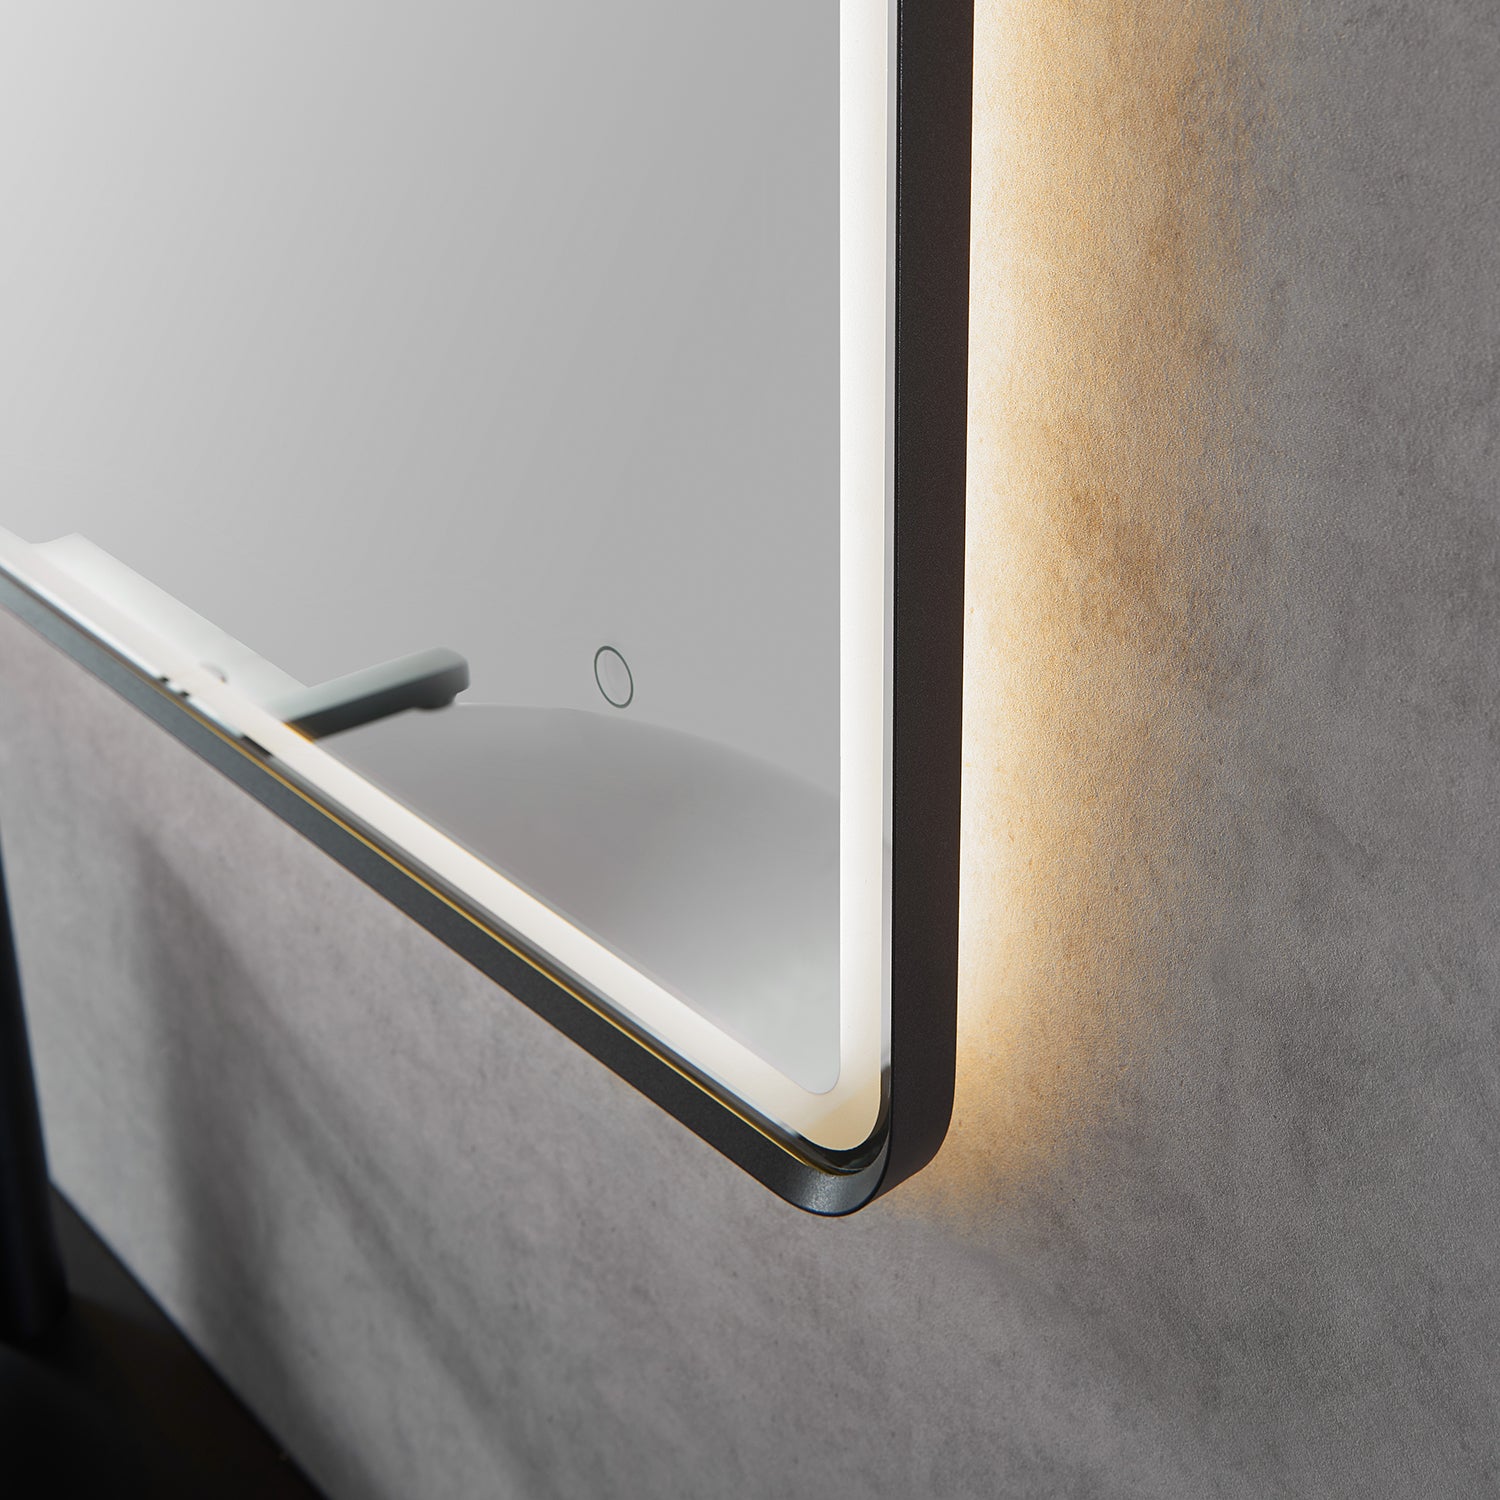 Viaggi Rectangle 48" Framed Modern Bathroom Vanity LED Lighted Wall Mirror